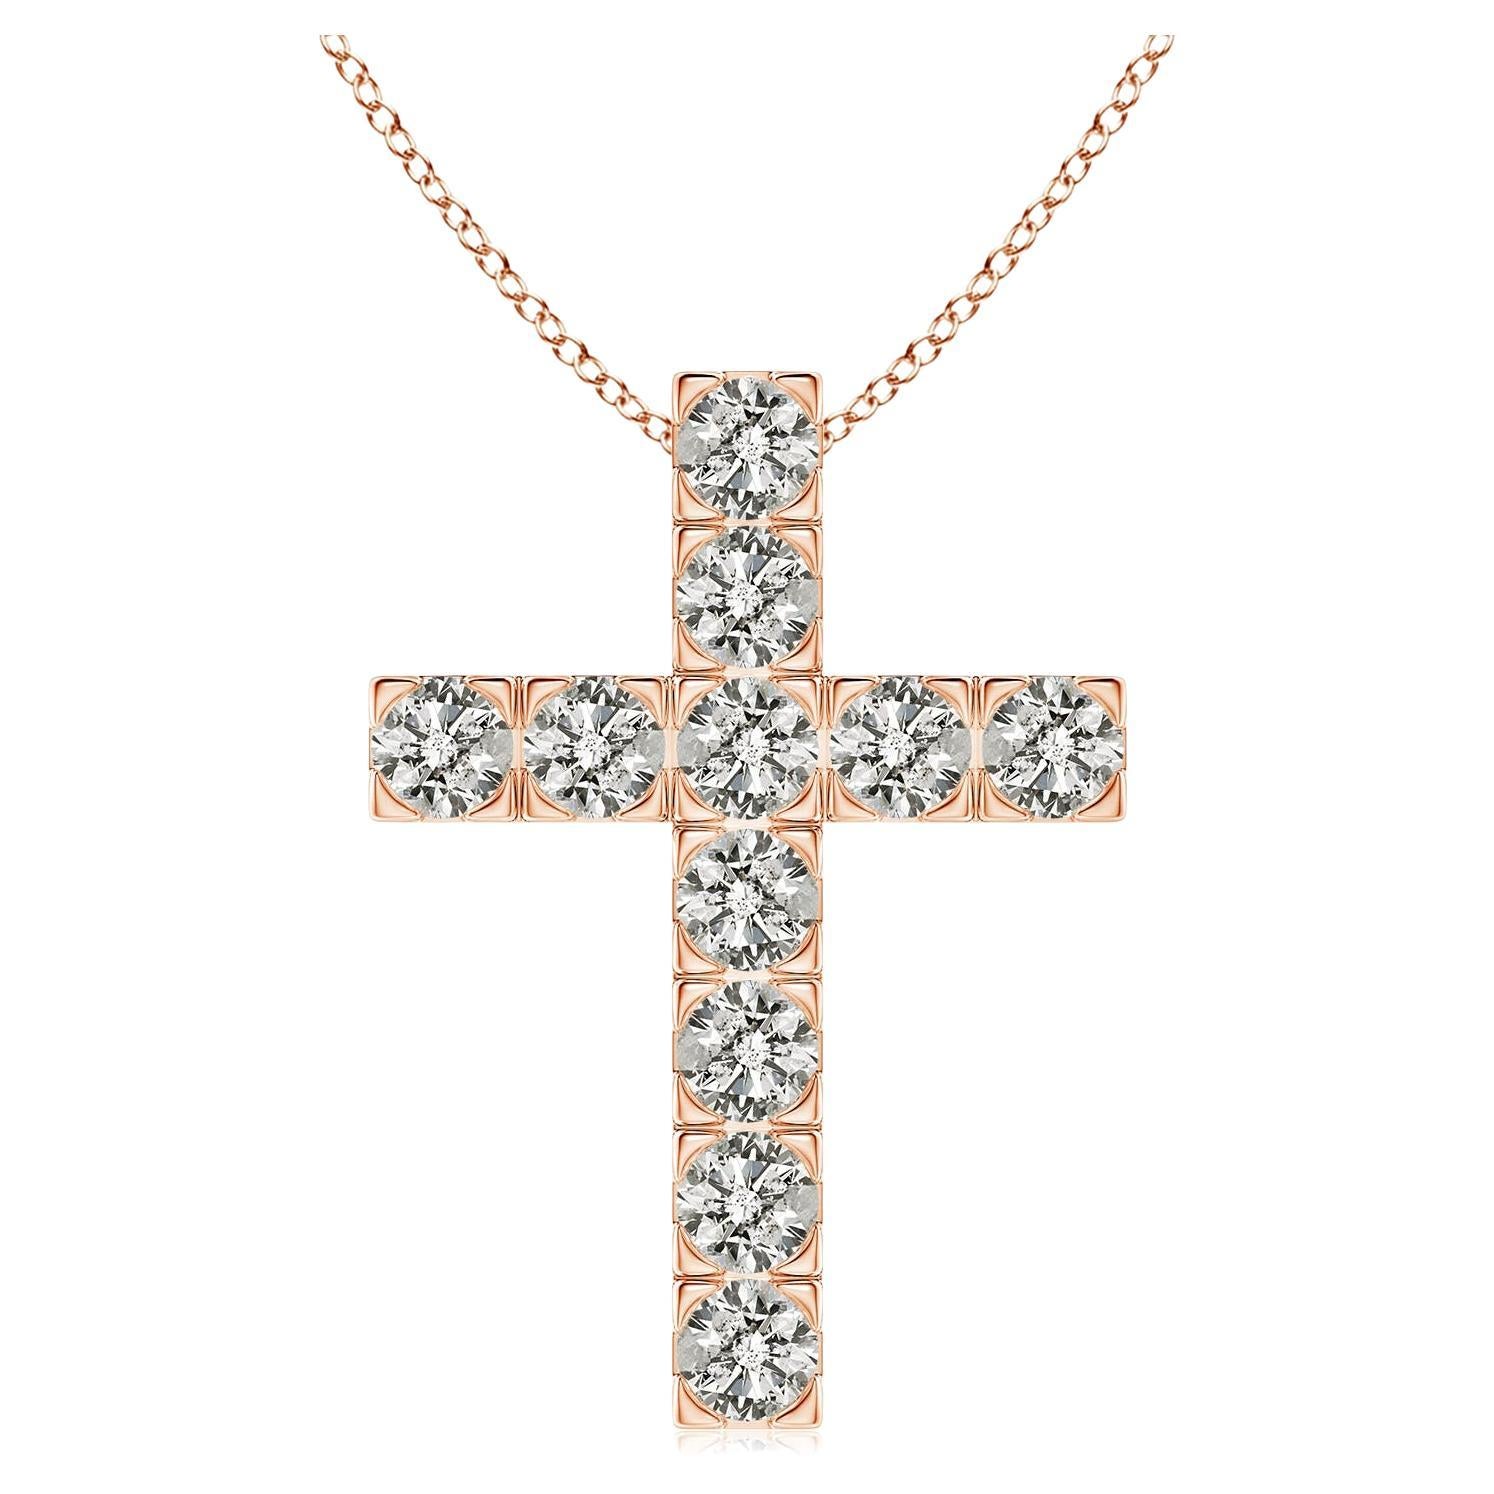 ANGARA Natural 1.75cttw Diamond Cross Pendant in 14K Rose Gold (Color- K, I3) For Sale